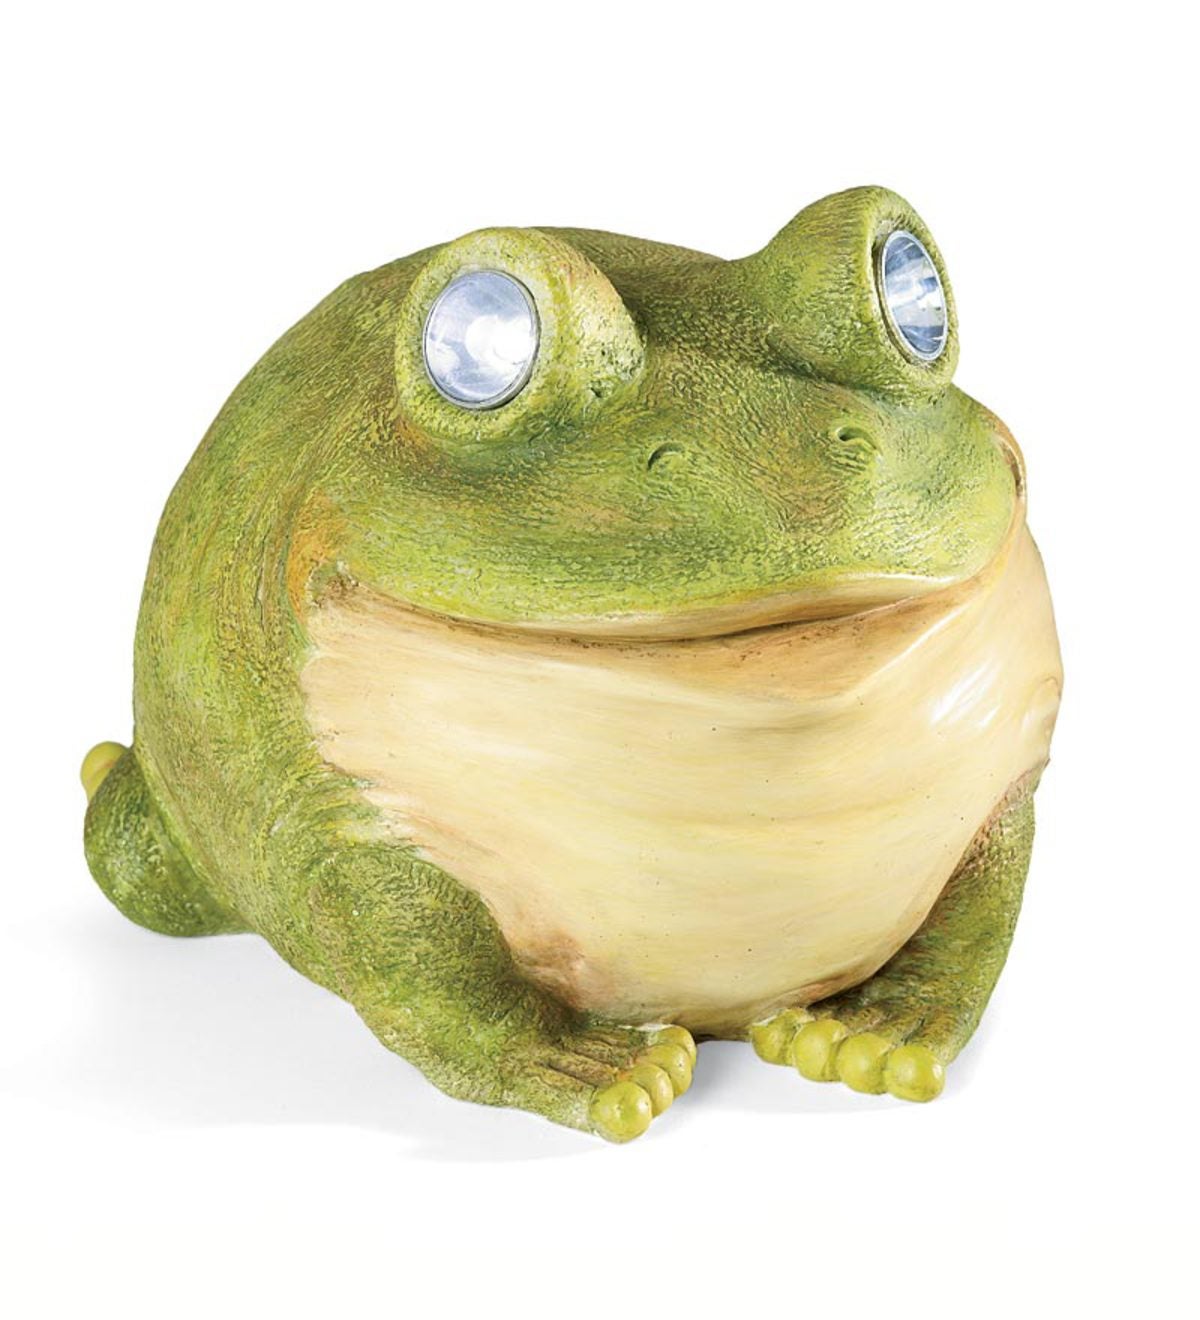 Bright Eyes Solar Garden Statue - Frog